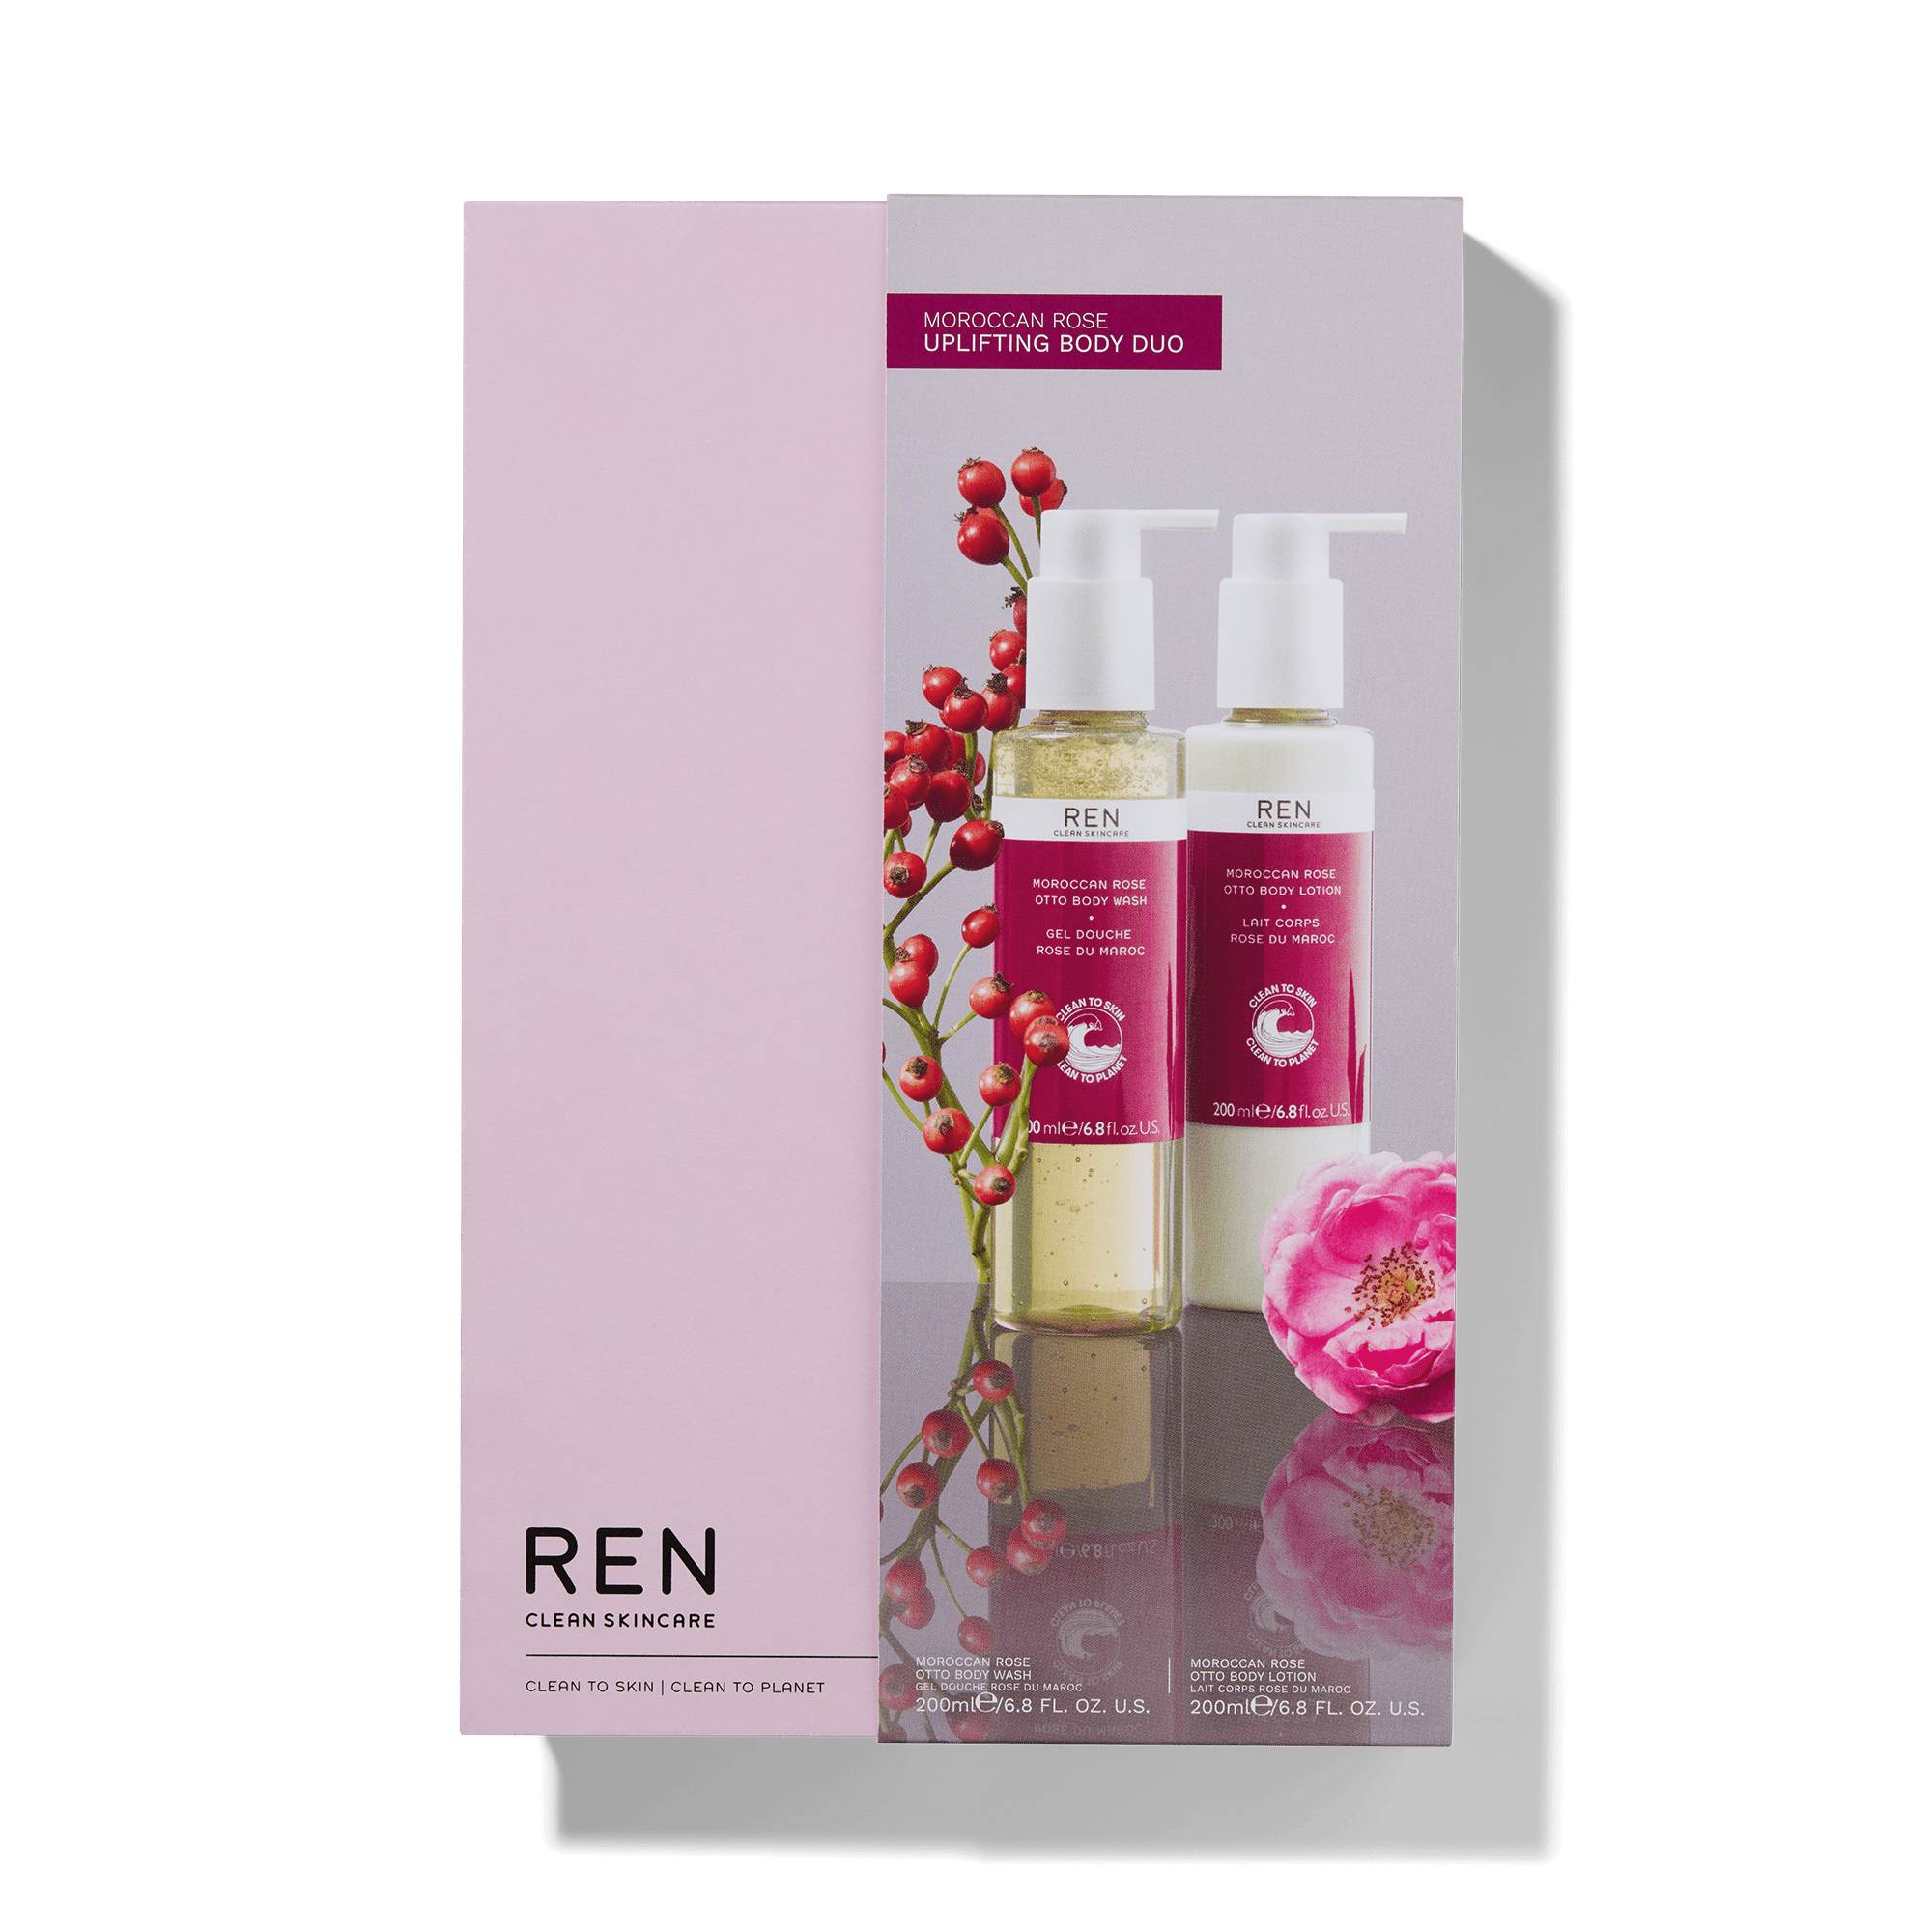 Rose Fragrance Oil – PUREOYL HEALTHCARE